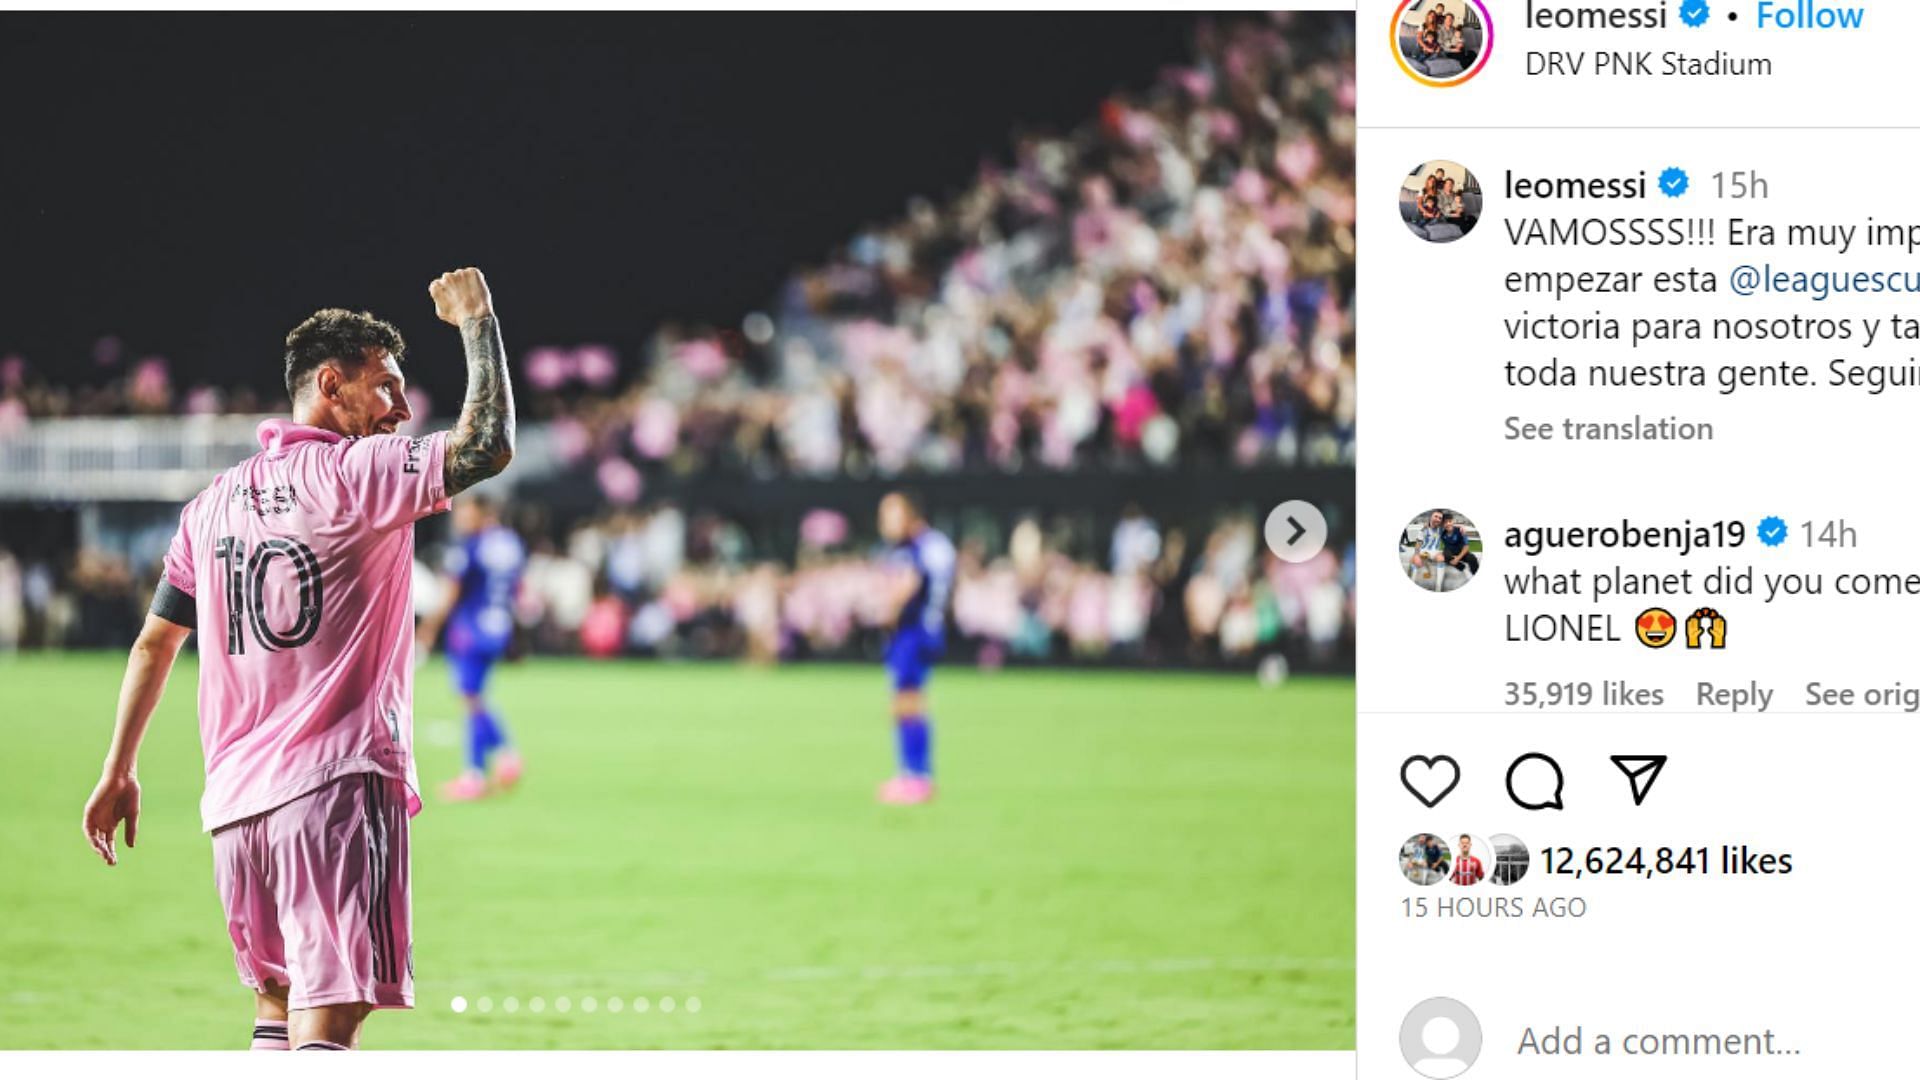 Sergio Aguero&#039;s son commented under Lionel Messi&#039;s post